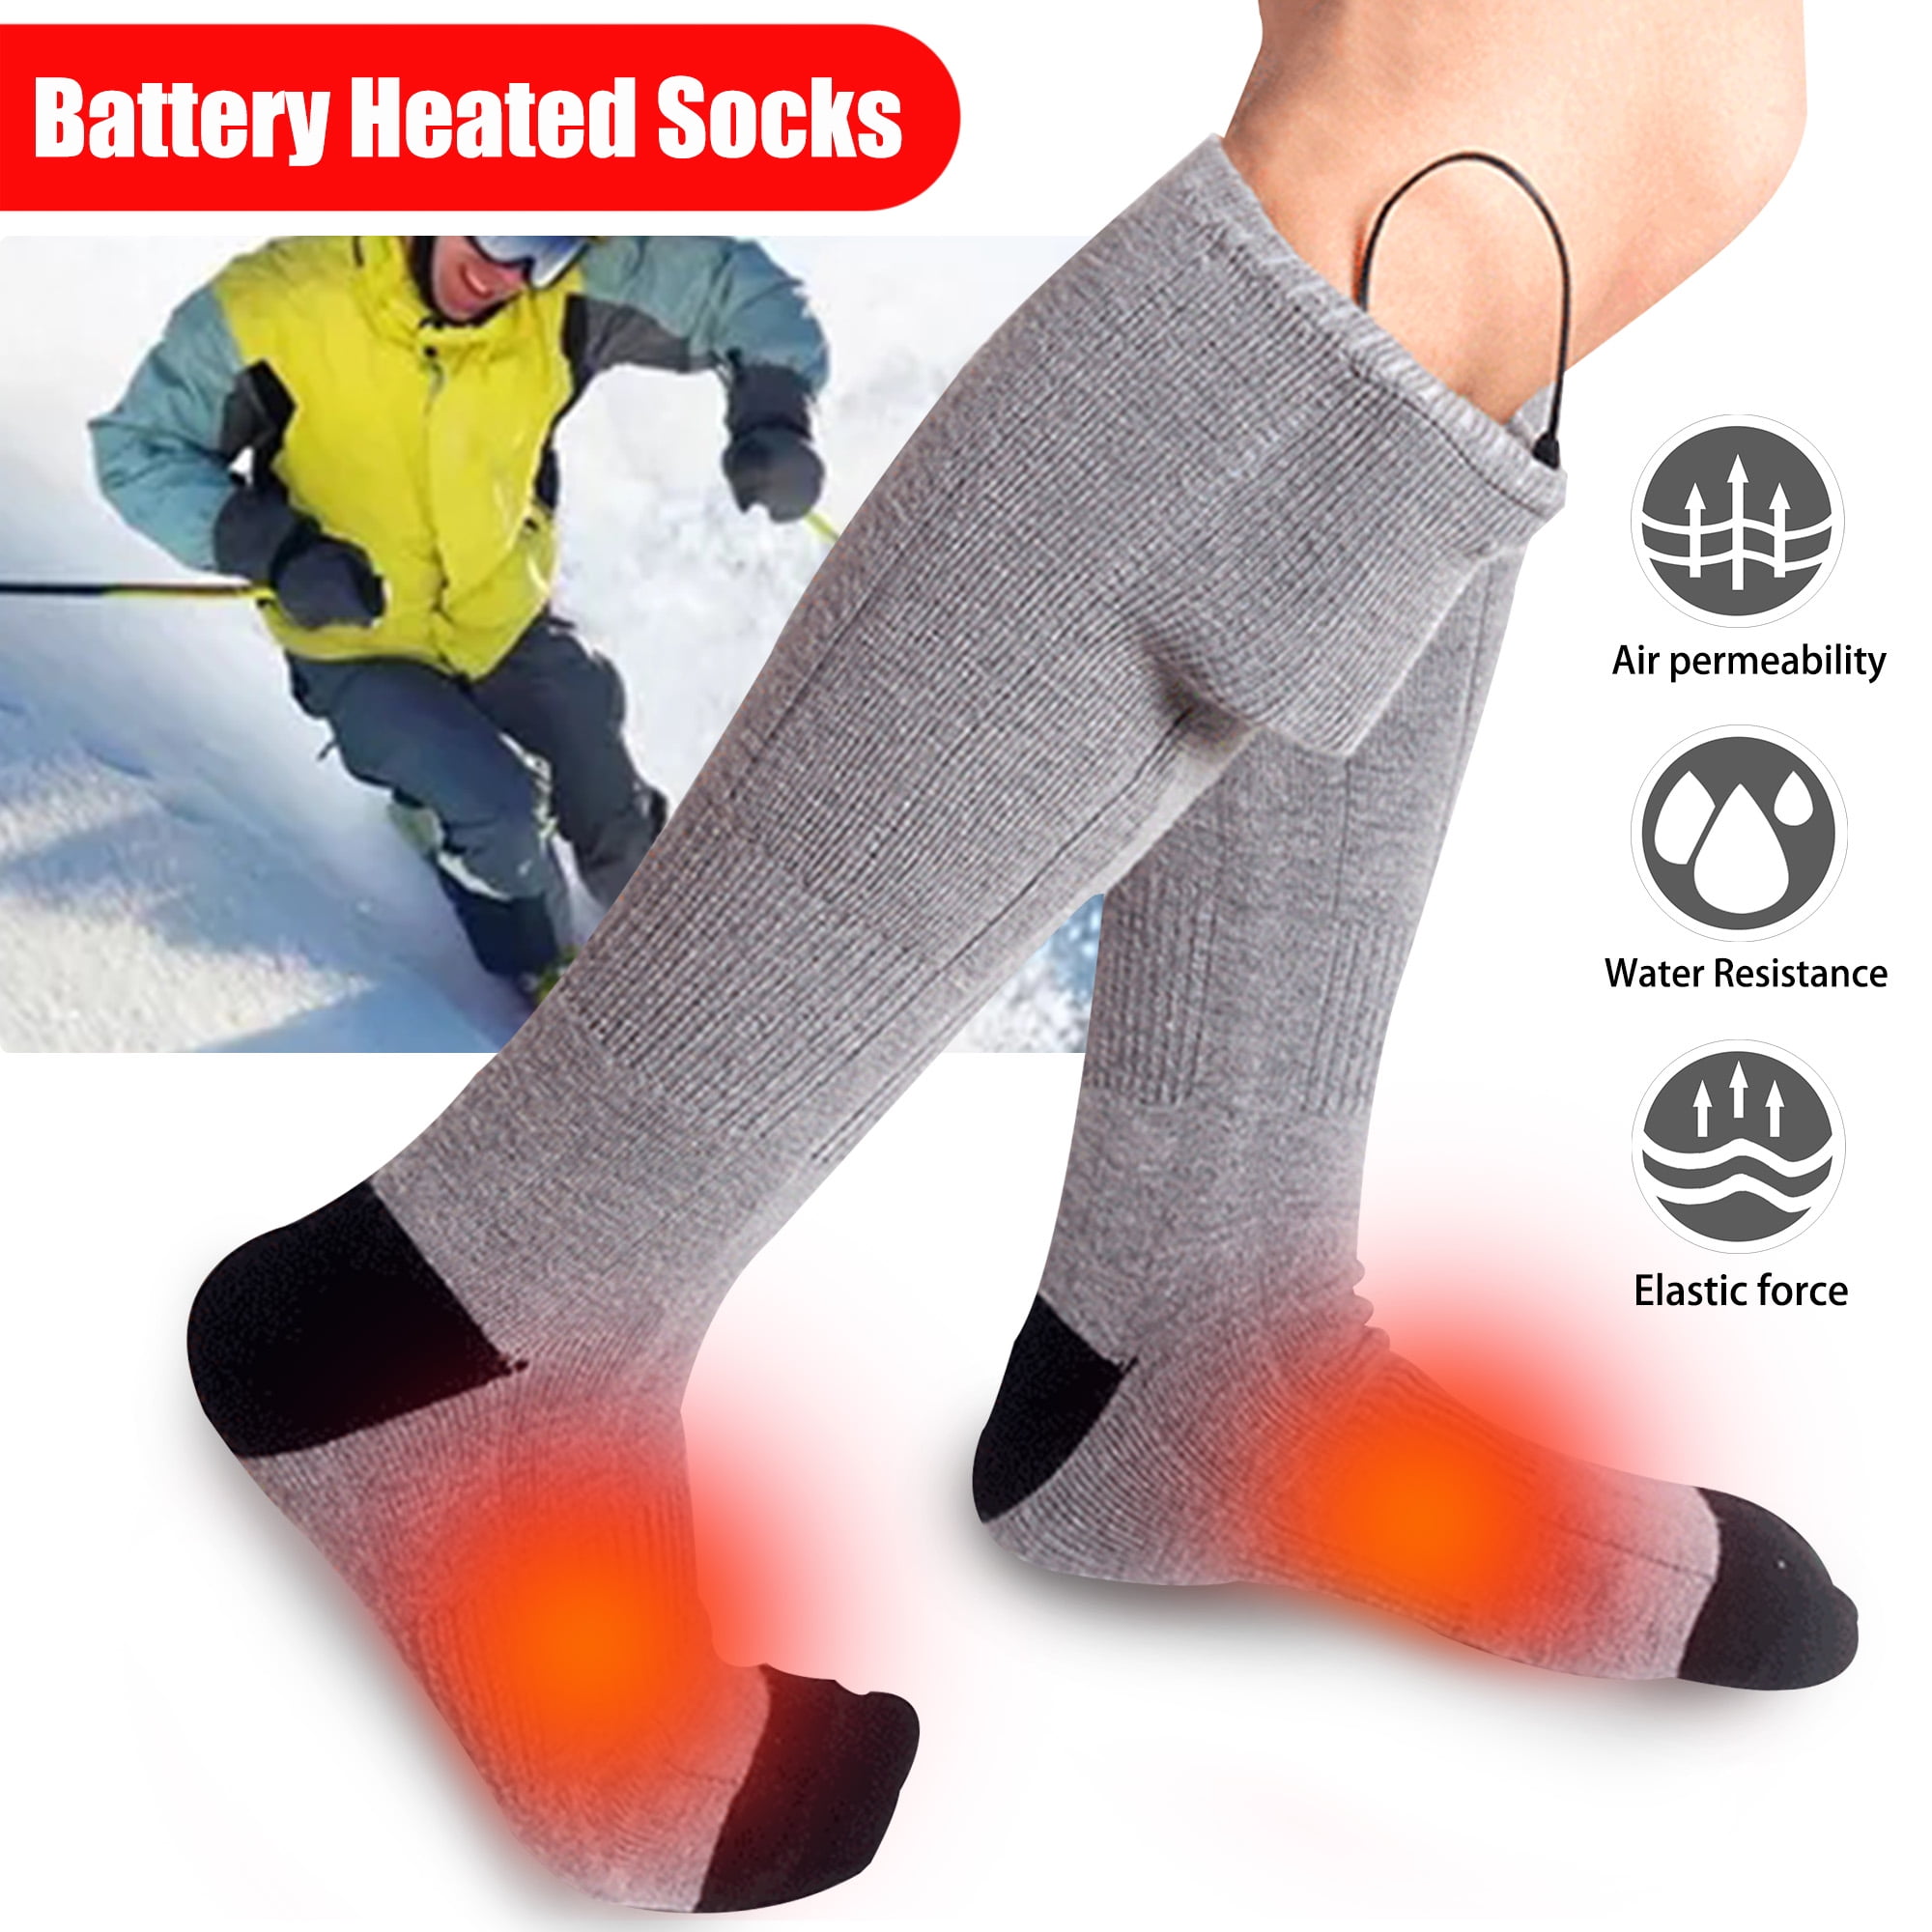 1/2 Pair Electric Heated Socks Rechargeable Battery Men Women Winter Foot Warmer 